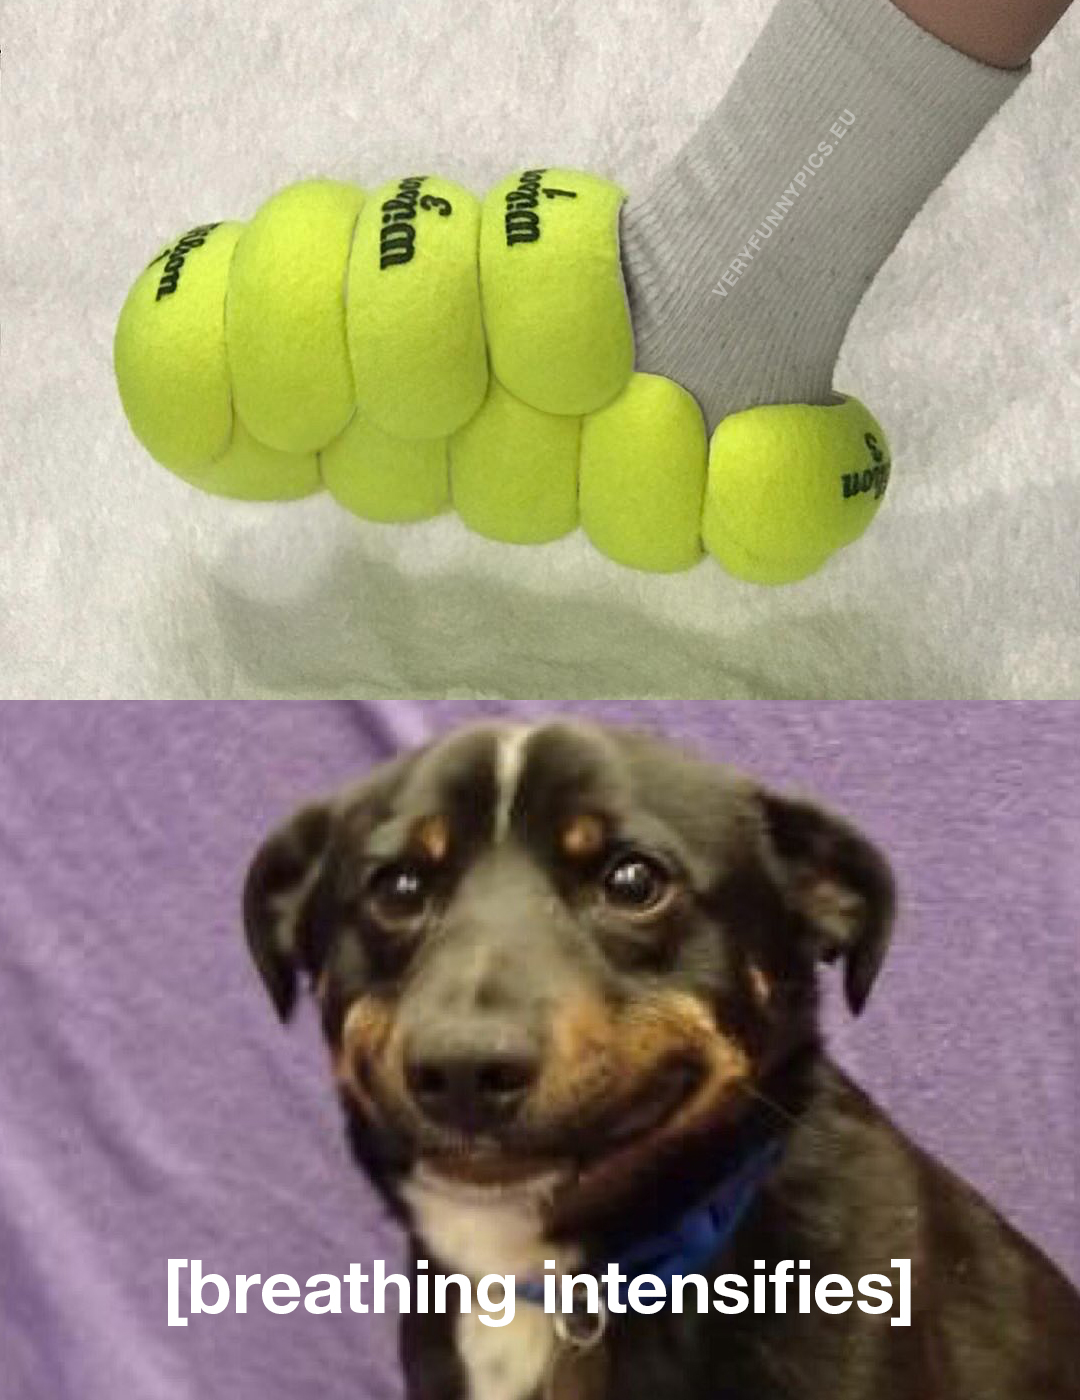 Dog sees tennis ball shoe